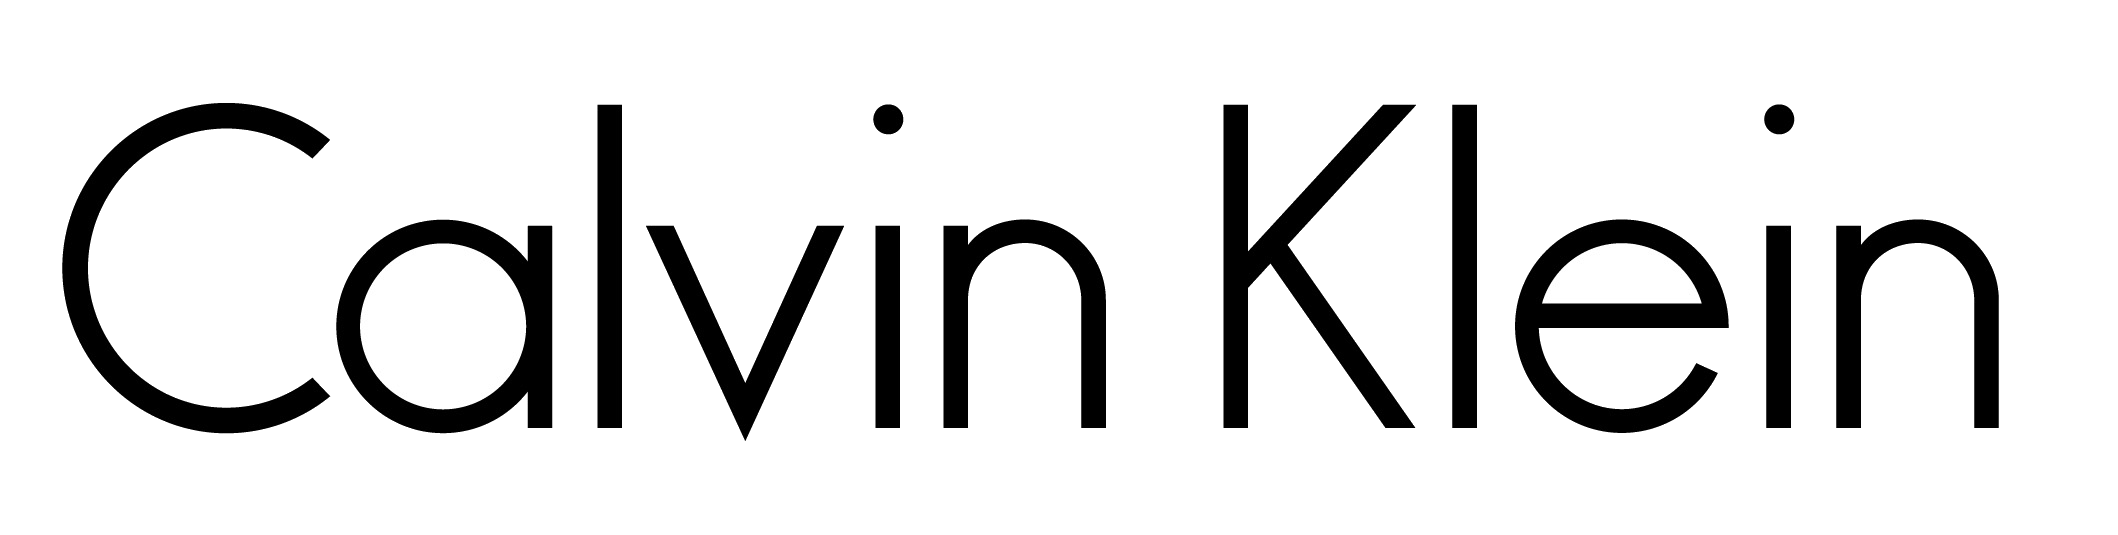 Calvin Klein logo png transpa